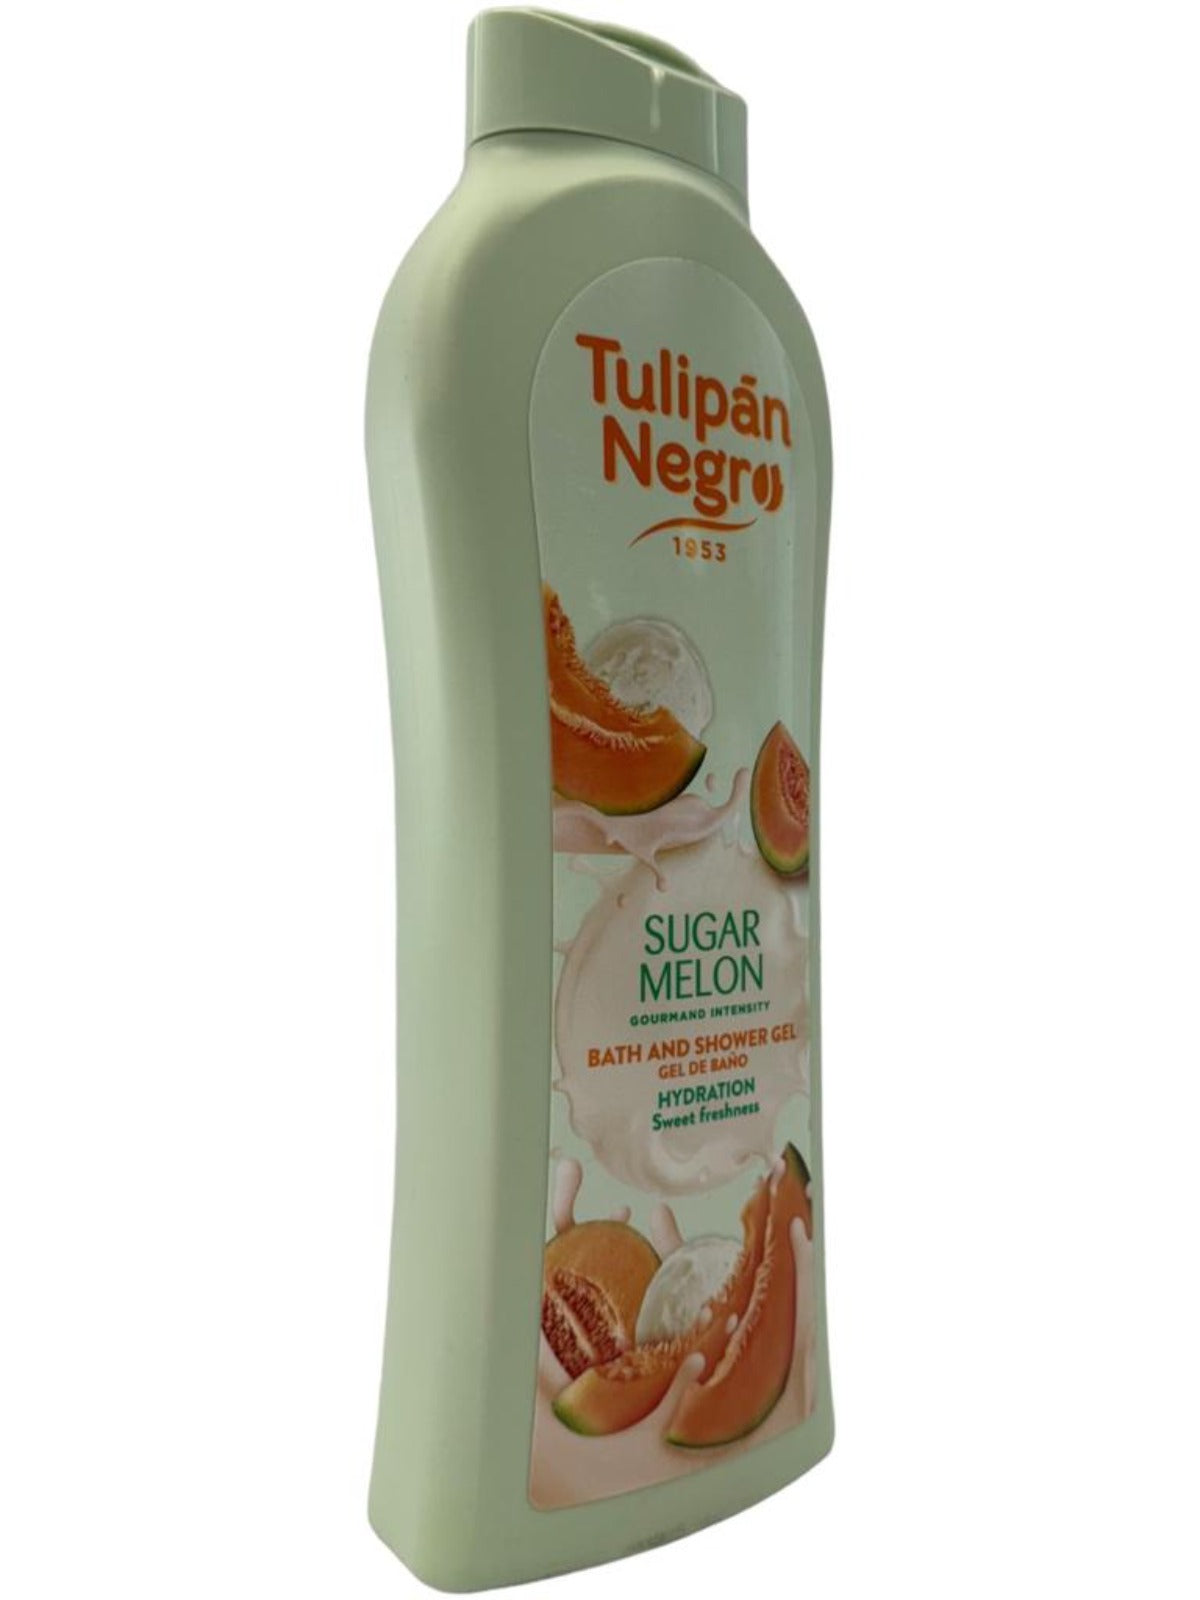 Tulipan Negro Sugar Melon Spanish Bath And Shower Gel 650ml